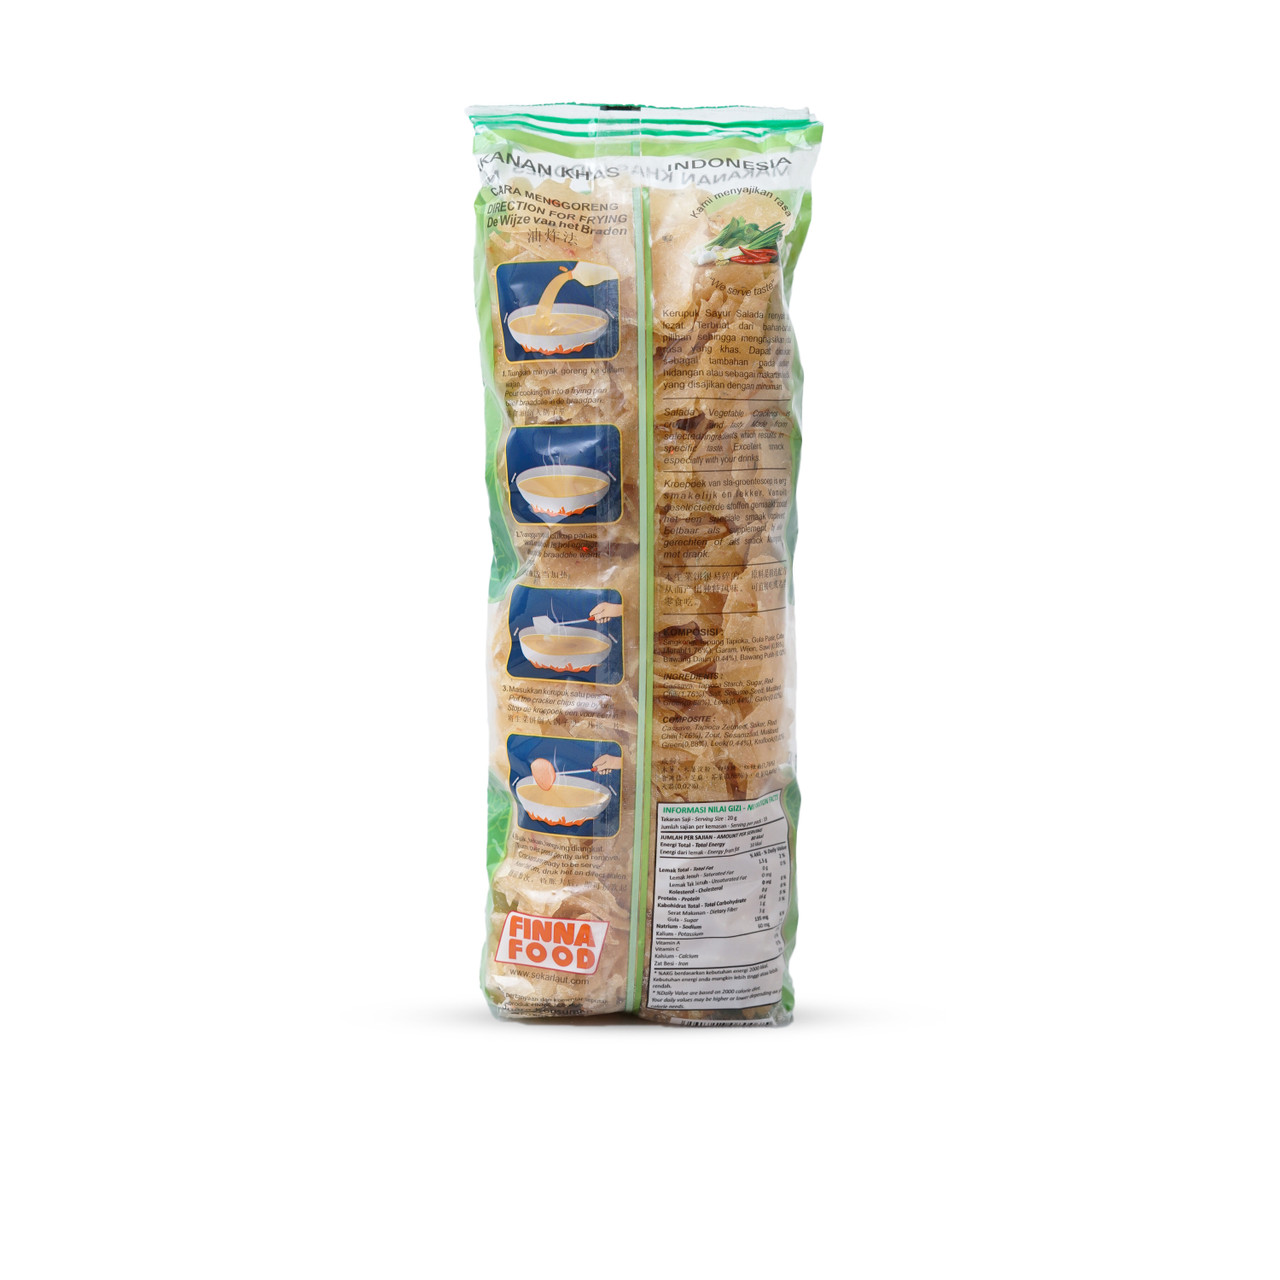 FINNA Lettuce Vegetable Crackers - FINNA Kerupuk Sayur Selada, 380gr